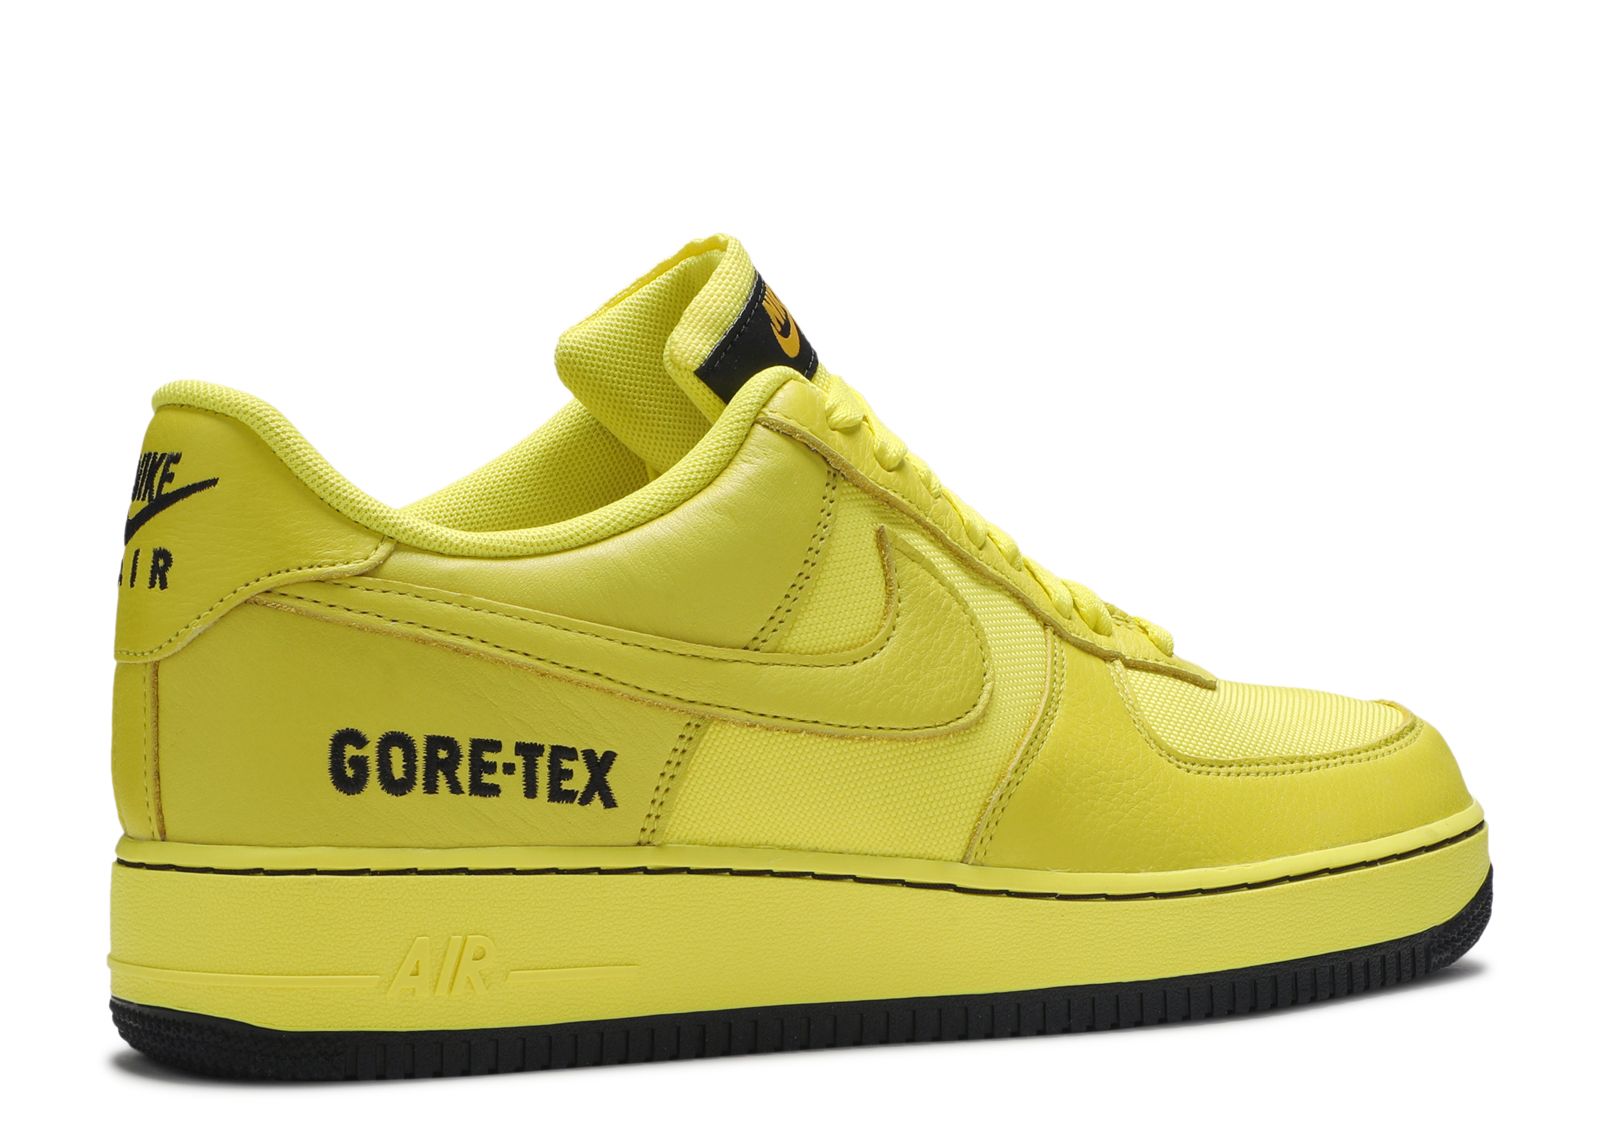 Gore Tex X Air Force 1 Low 'Dynamic Yellow' - Nike - CK2630 701 ... تبر